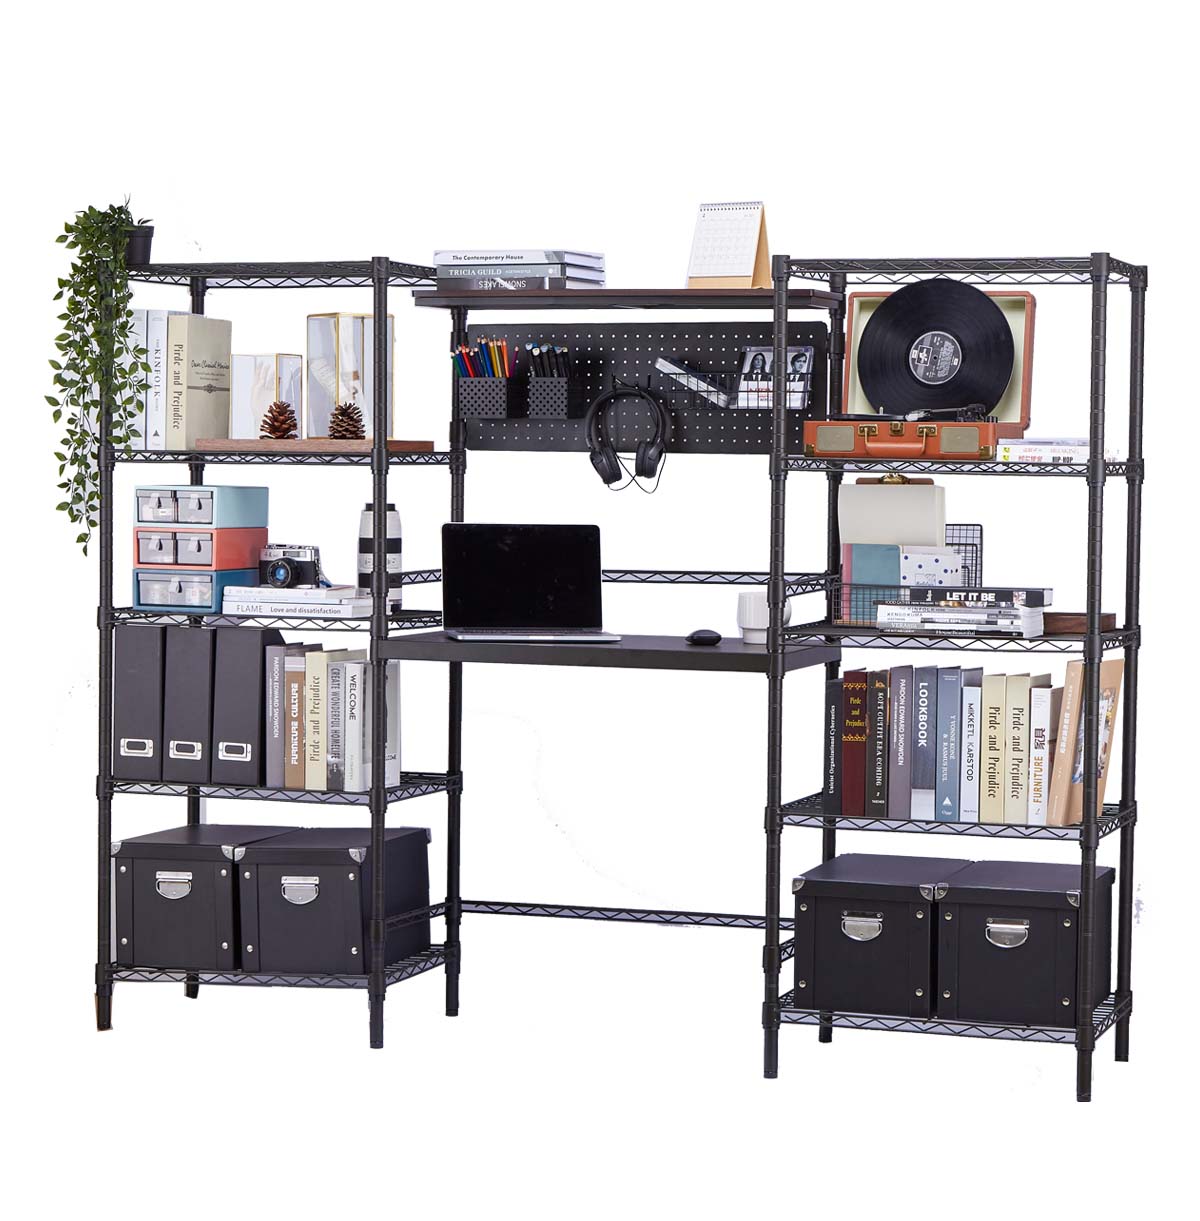 12-Tier Bookshelf / Workstation Computer Desk With Wire Storage Shelves / Home Office PC Laptop Tabl